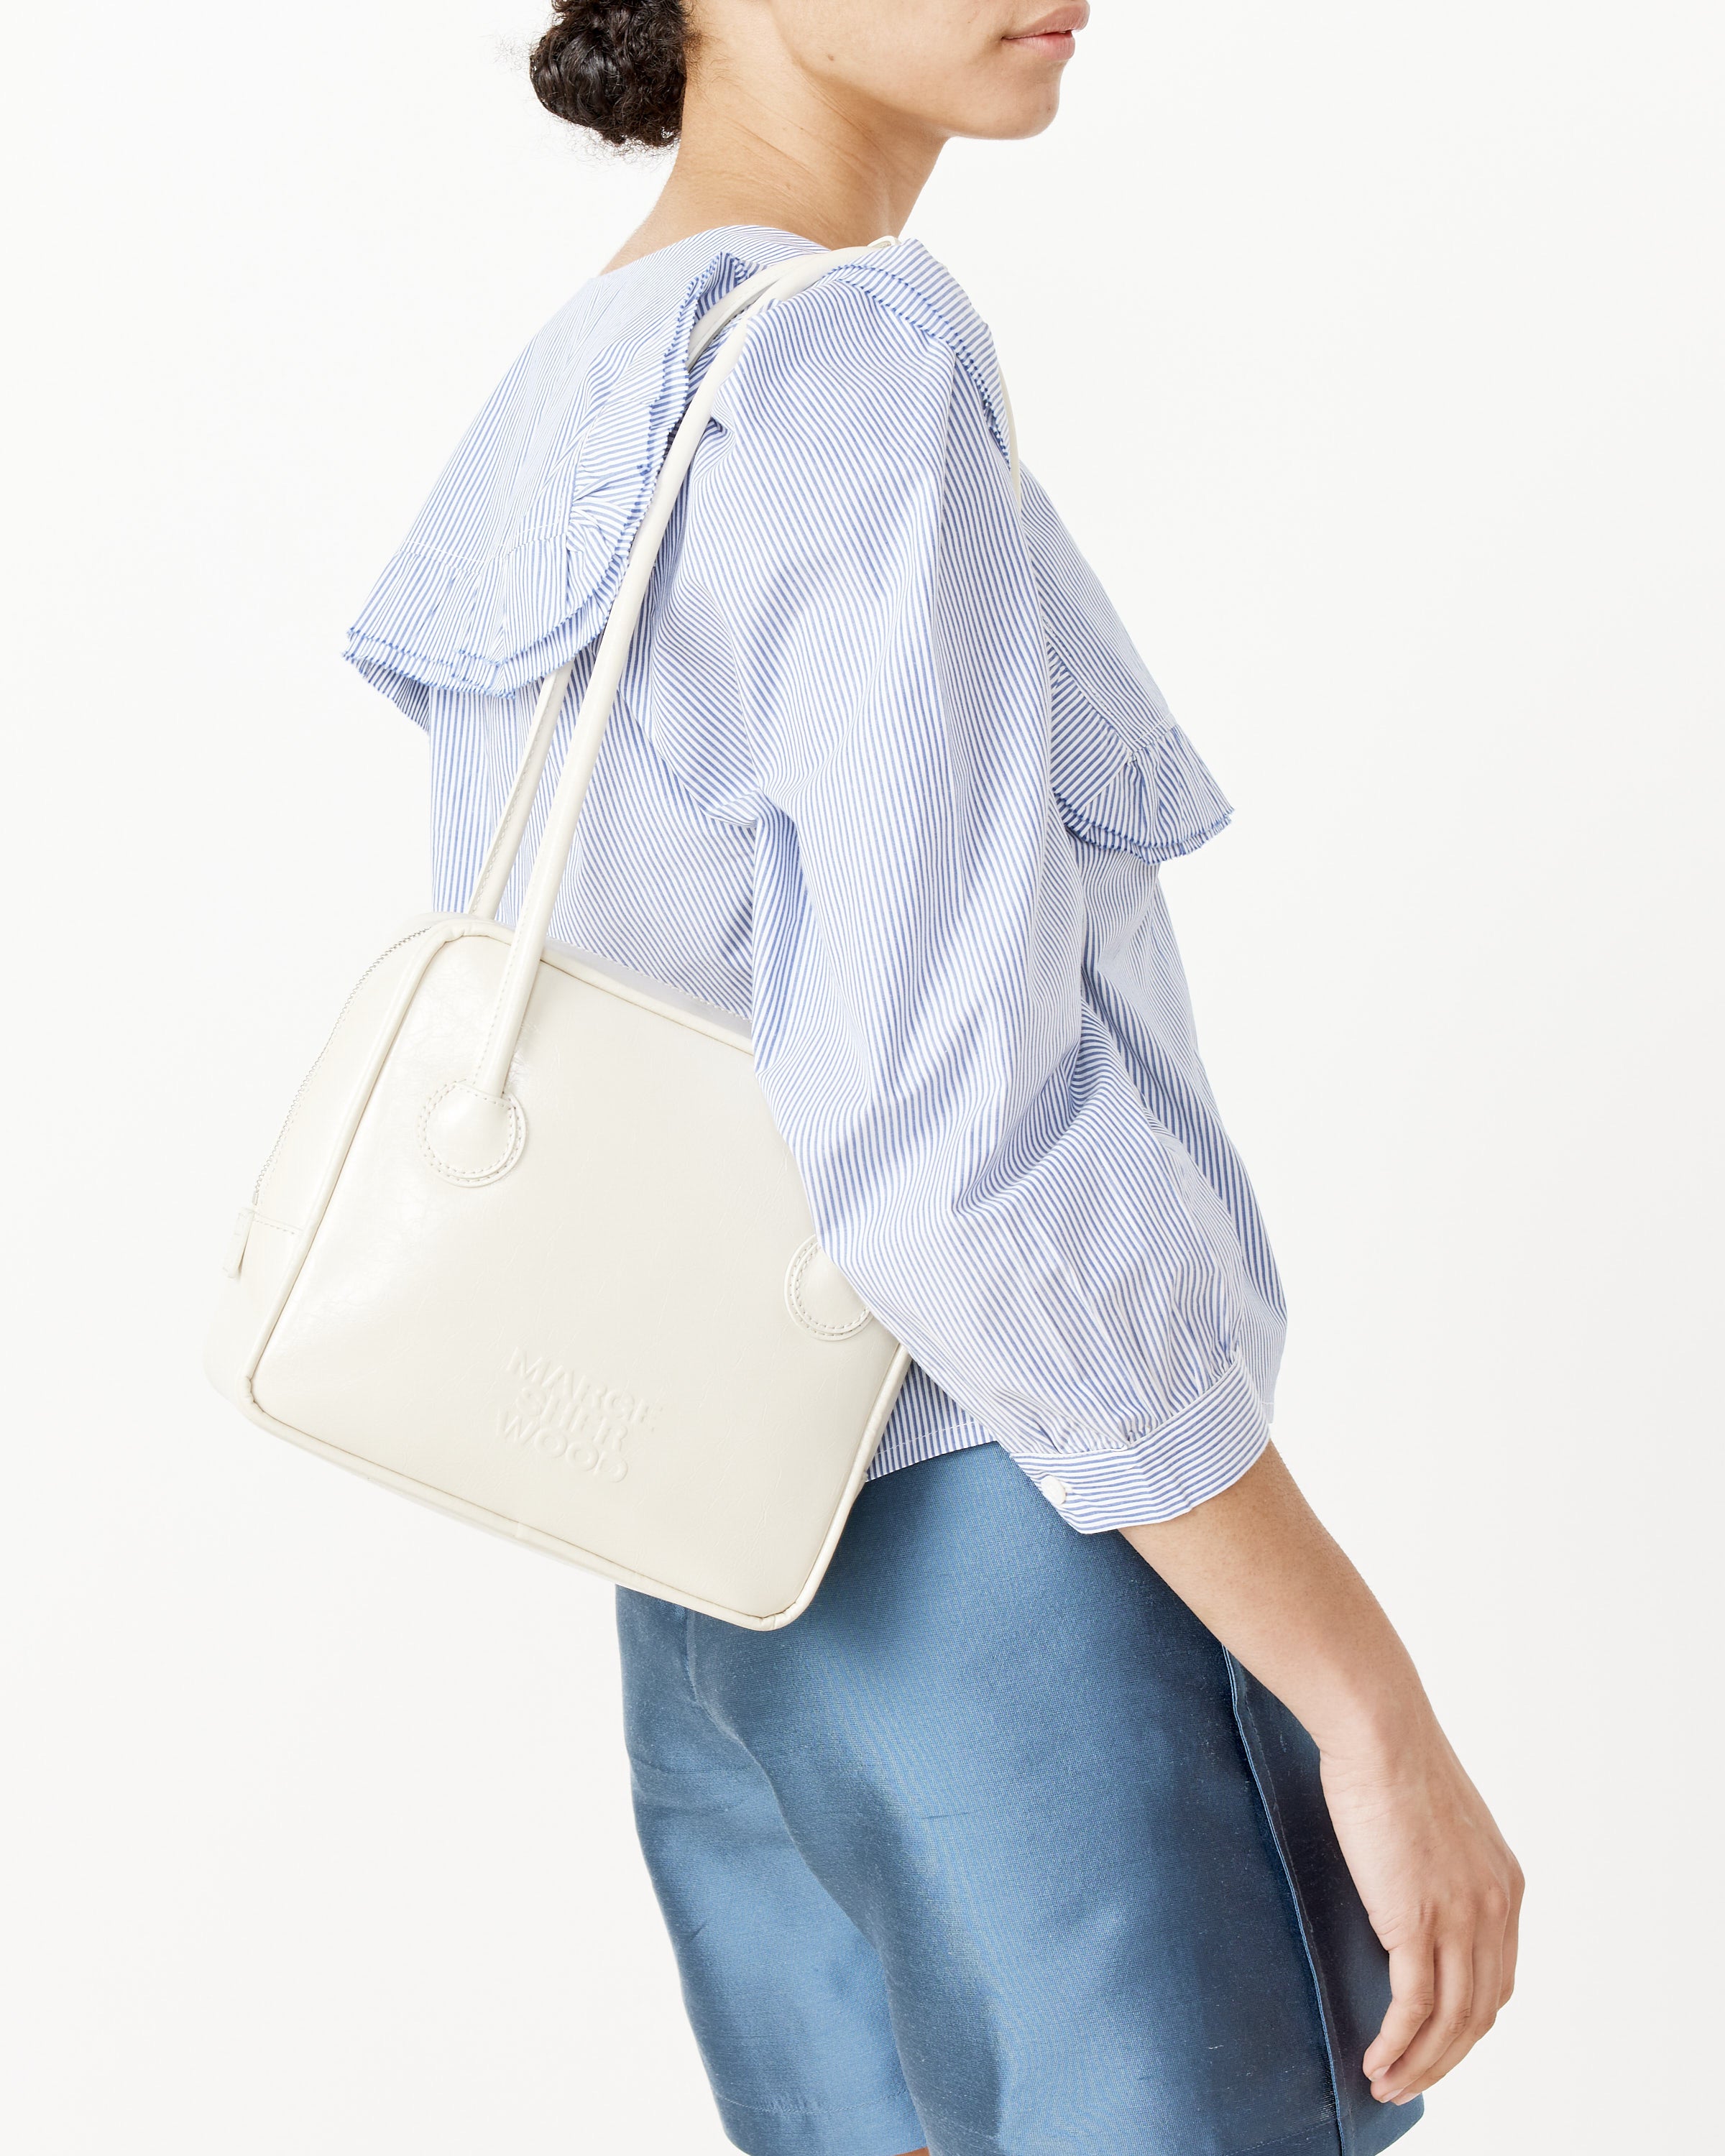 Marge Sherwood Mini Shoulder Bag in White